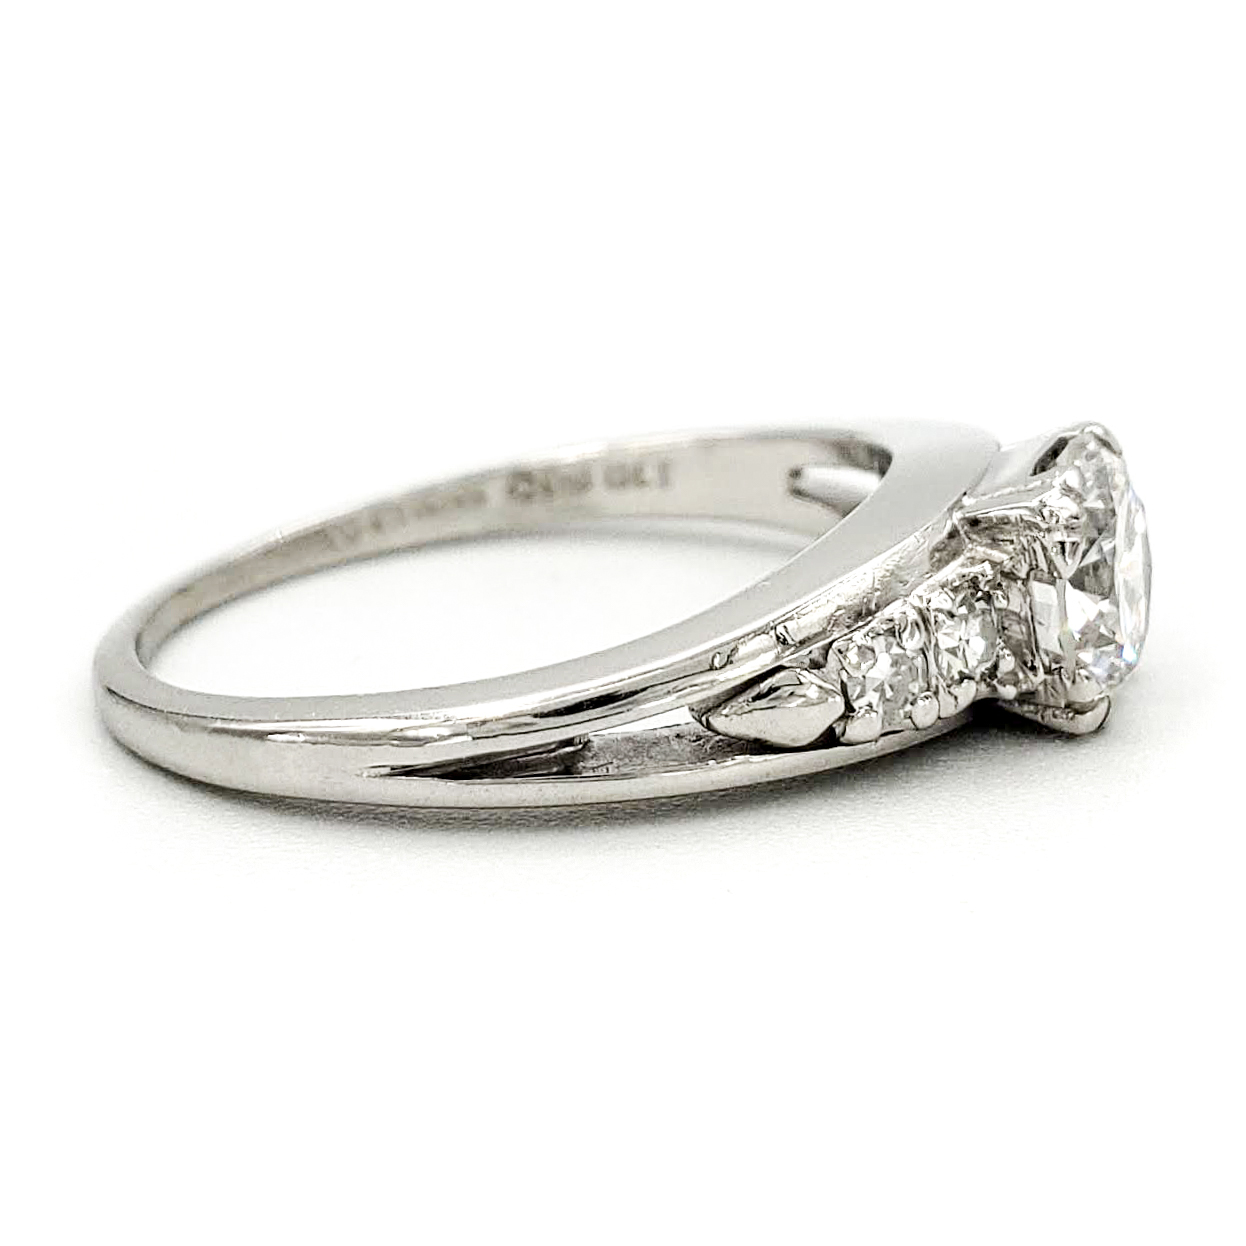 vintage-platinum-engagement-ring-with-0-67-carat-old-european-cut-diamond-egl-f-vs1